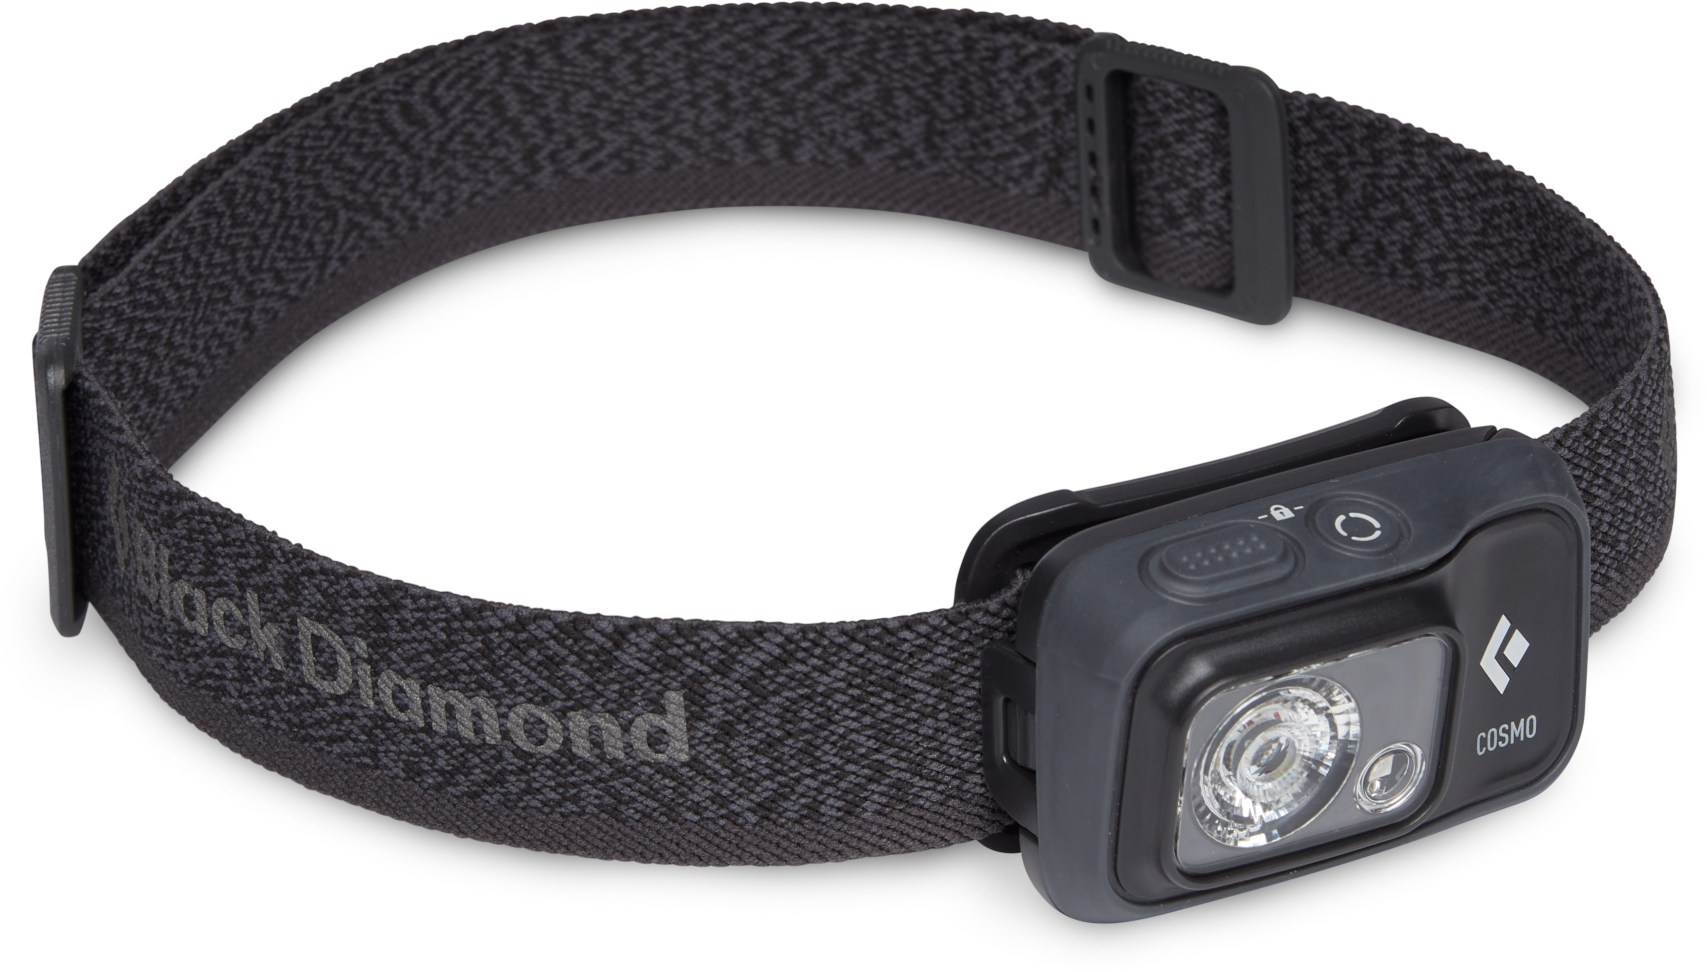 Фара Космо 350 Black Diamond, серый налобный фонарь для трейлраннинга 250 люмен ontrail evadict